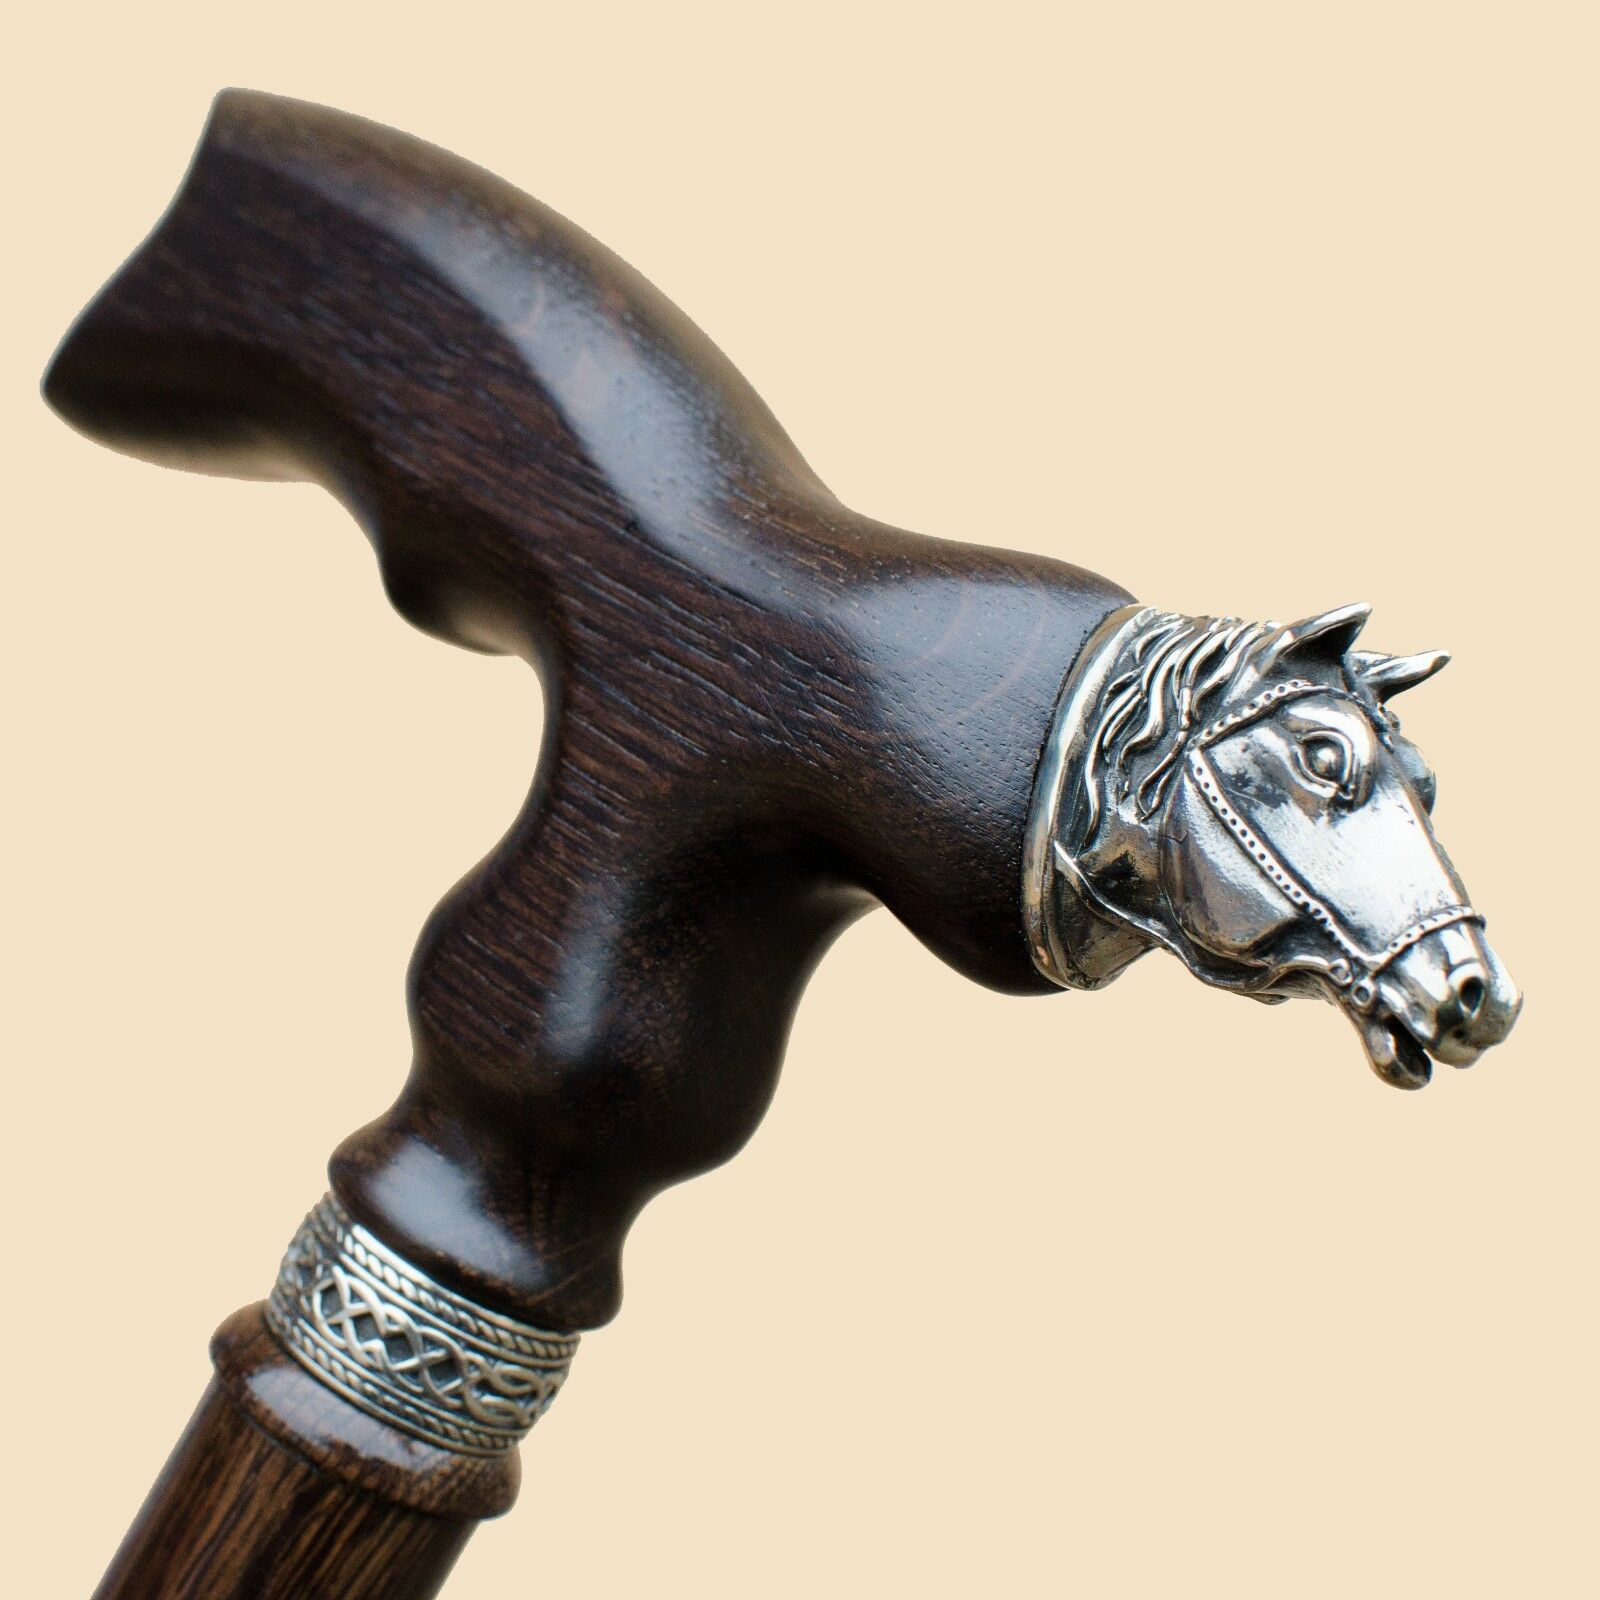 Custom Wooden Walking Cane For Men Fashionable - Horse - Cool Vintage Wood Canes